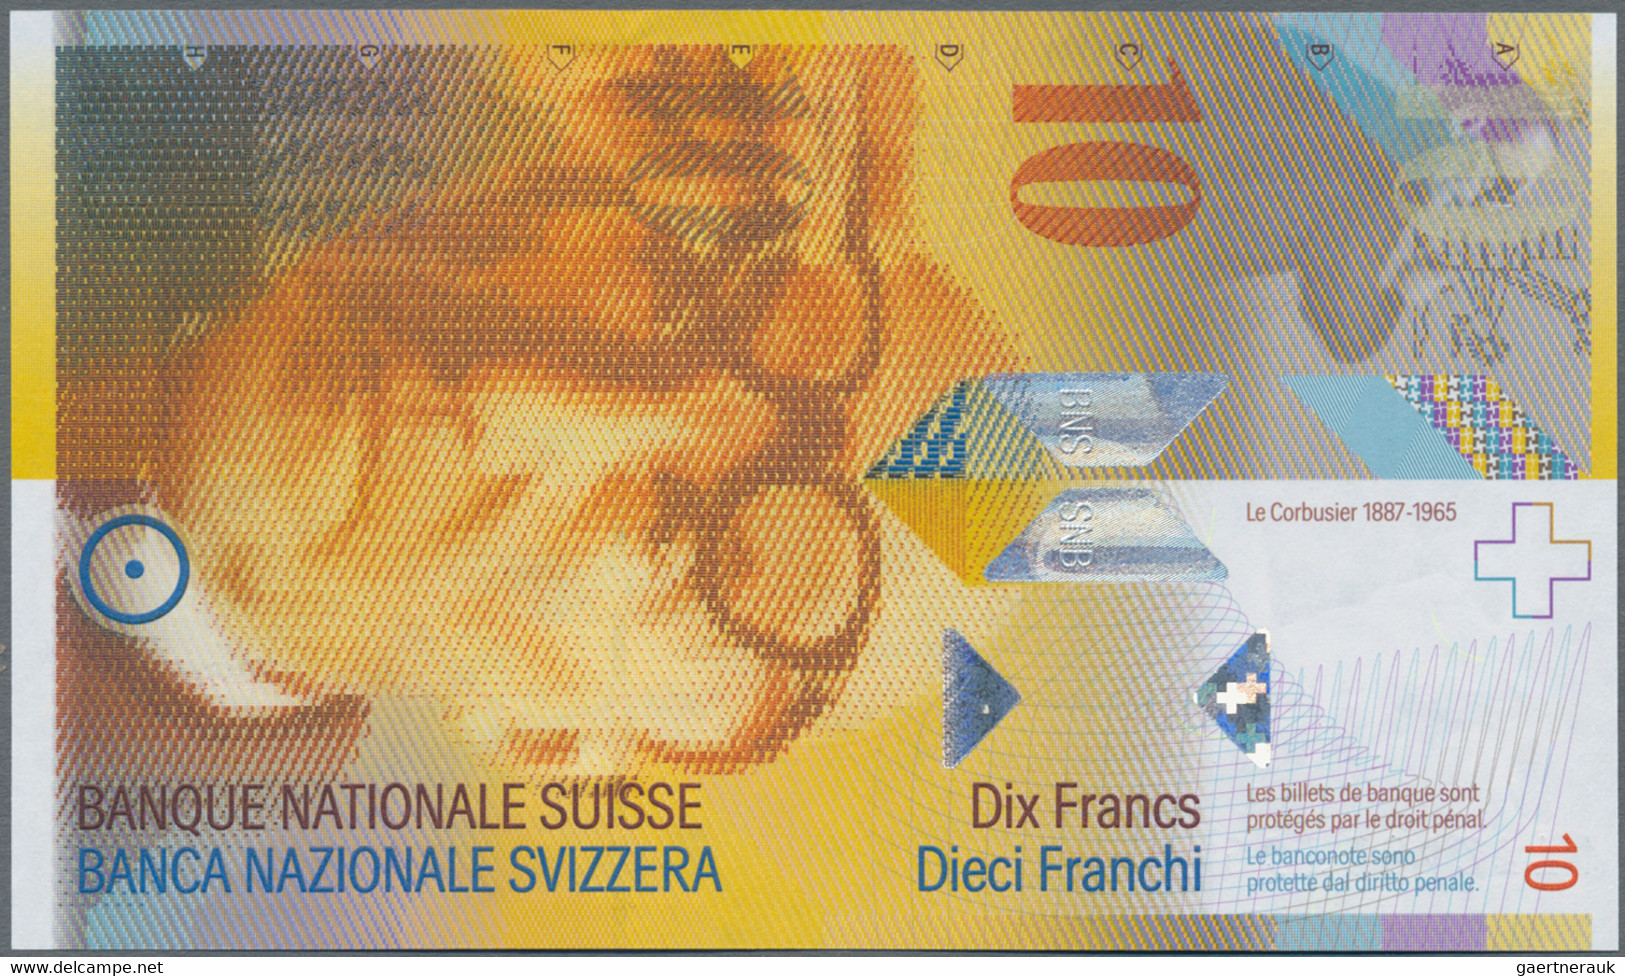 Switzerland / Schweiz: Very nice set with 9 banknotes, comprising 3x 10, 2x 20, 2x 50, 100 and 200 F